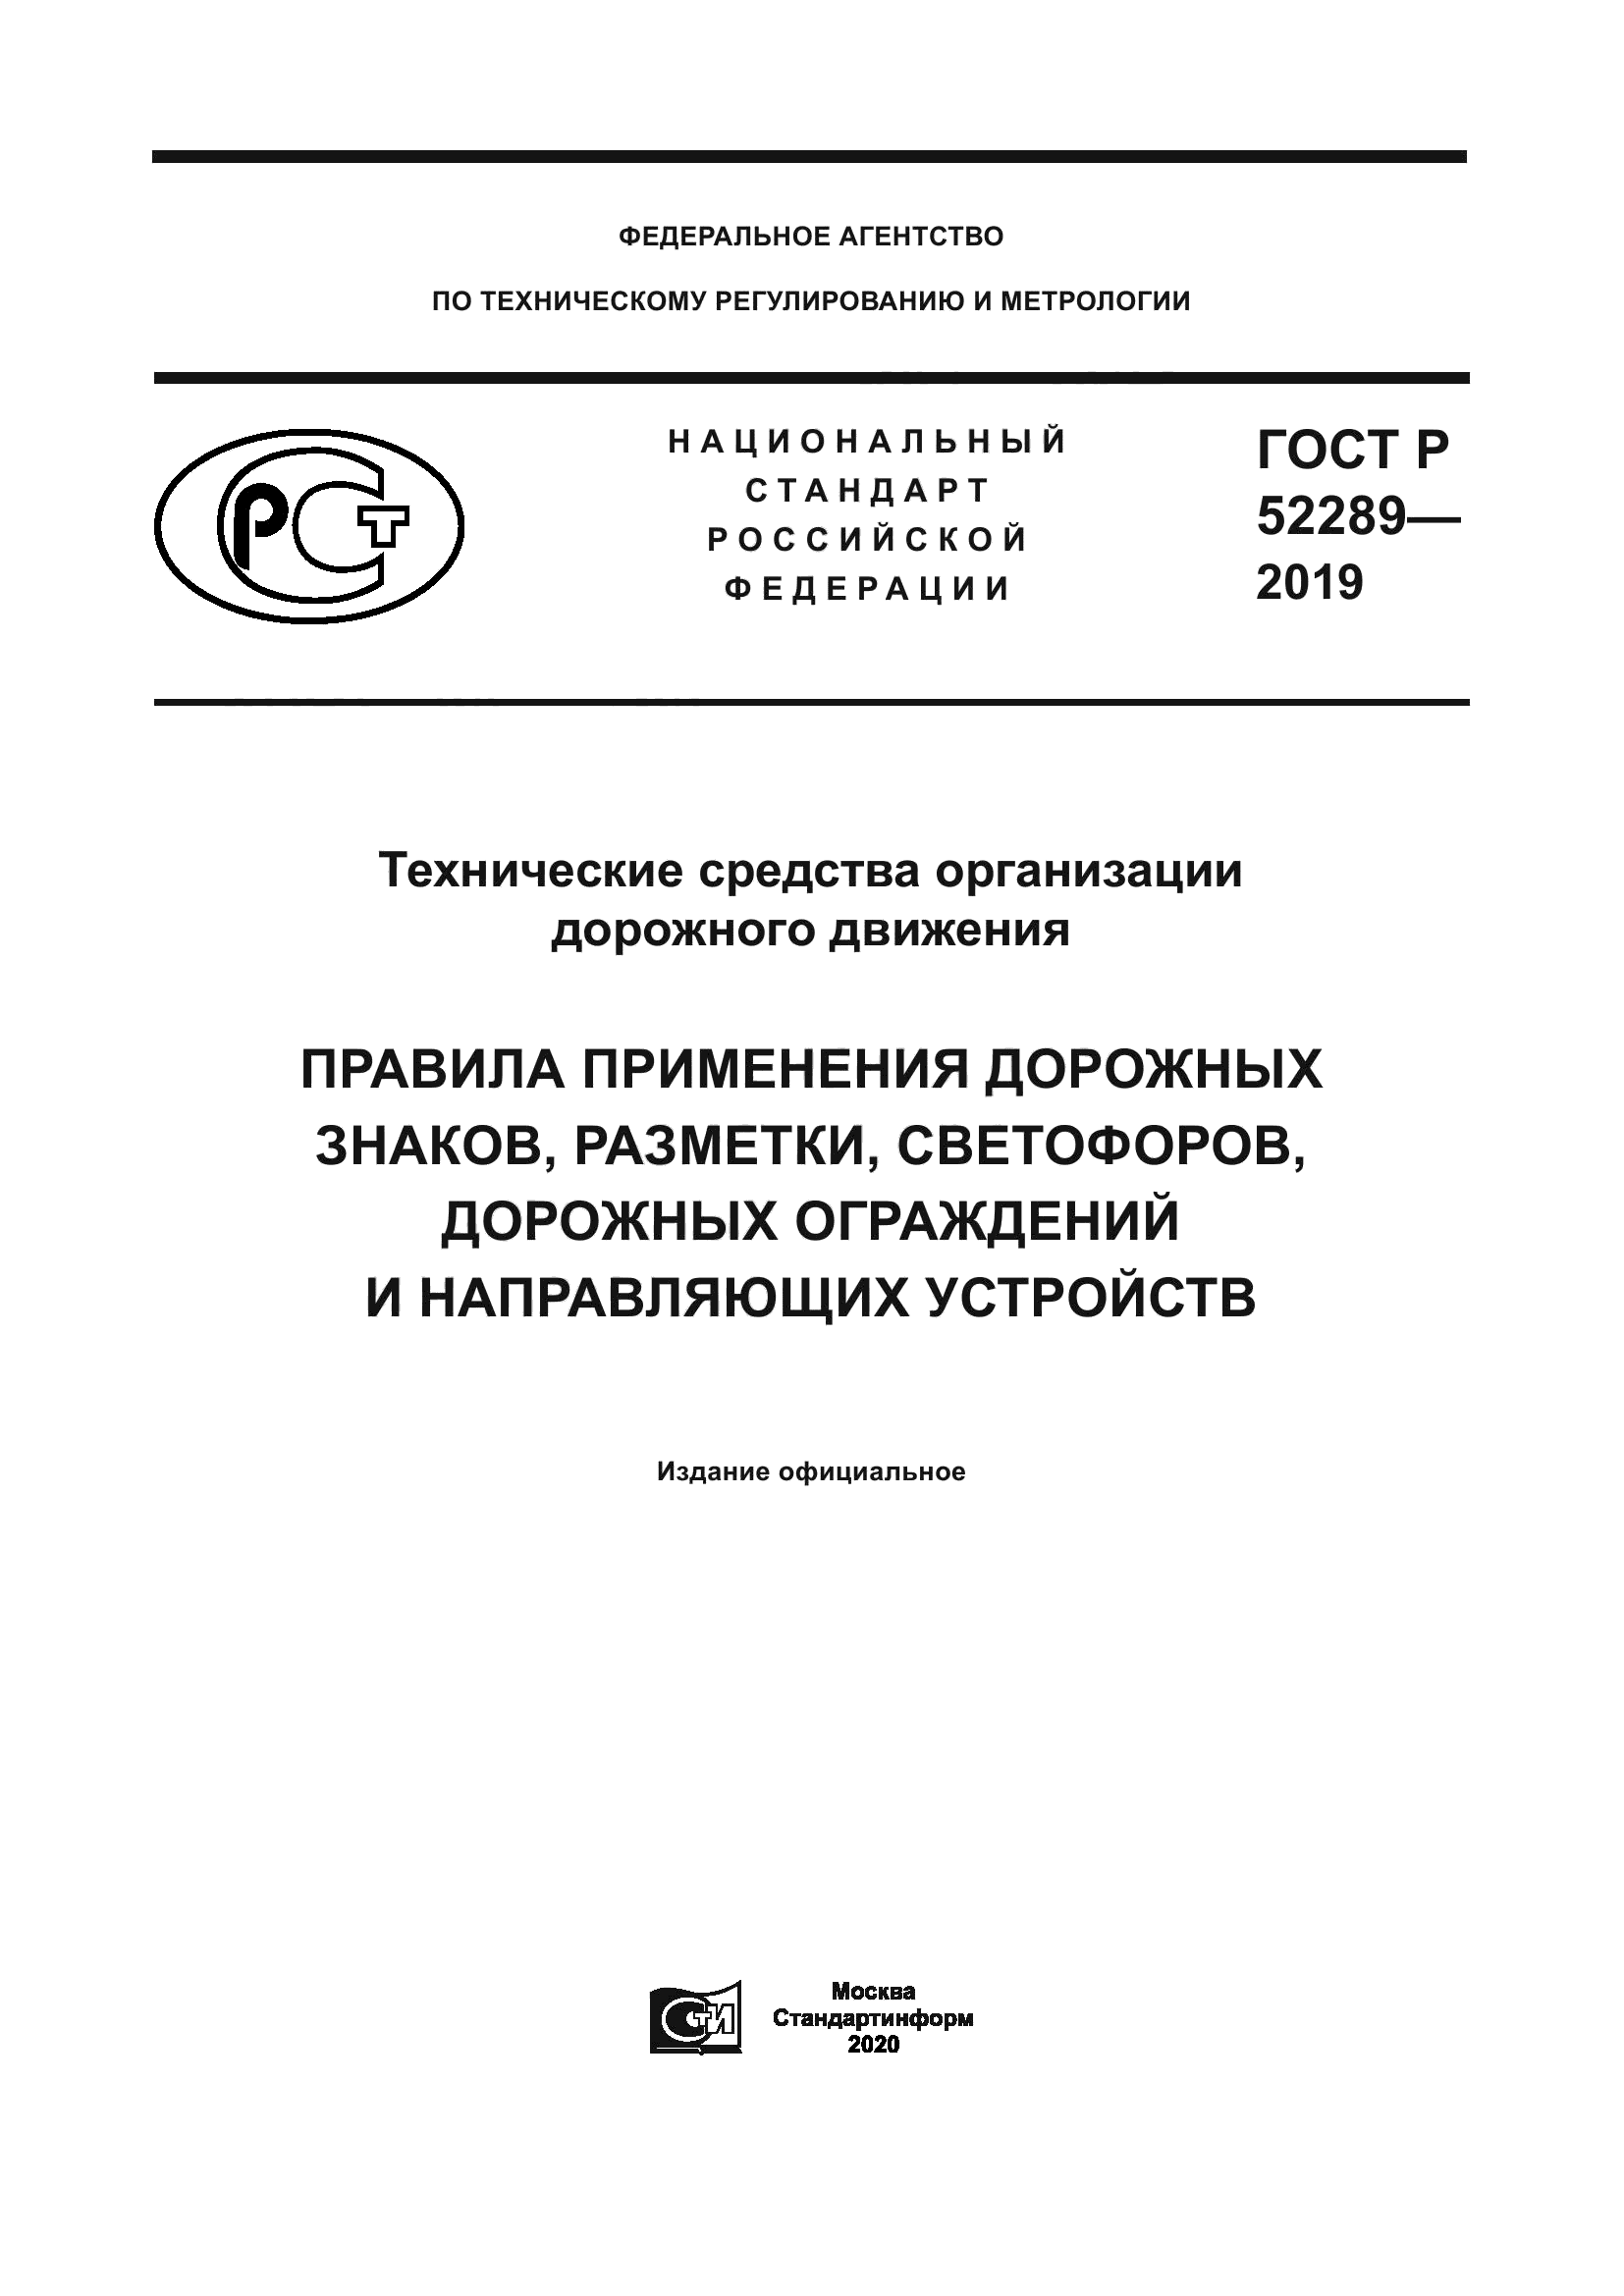 ГОСТ Р 52289-2019